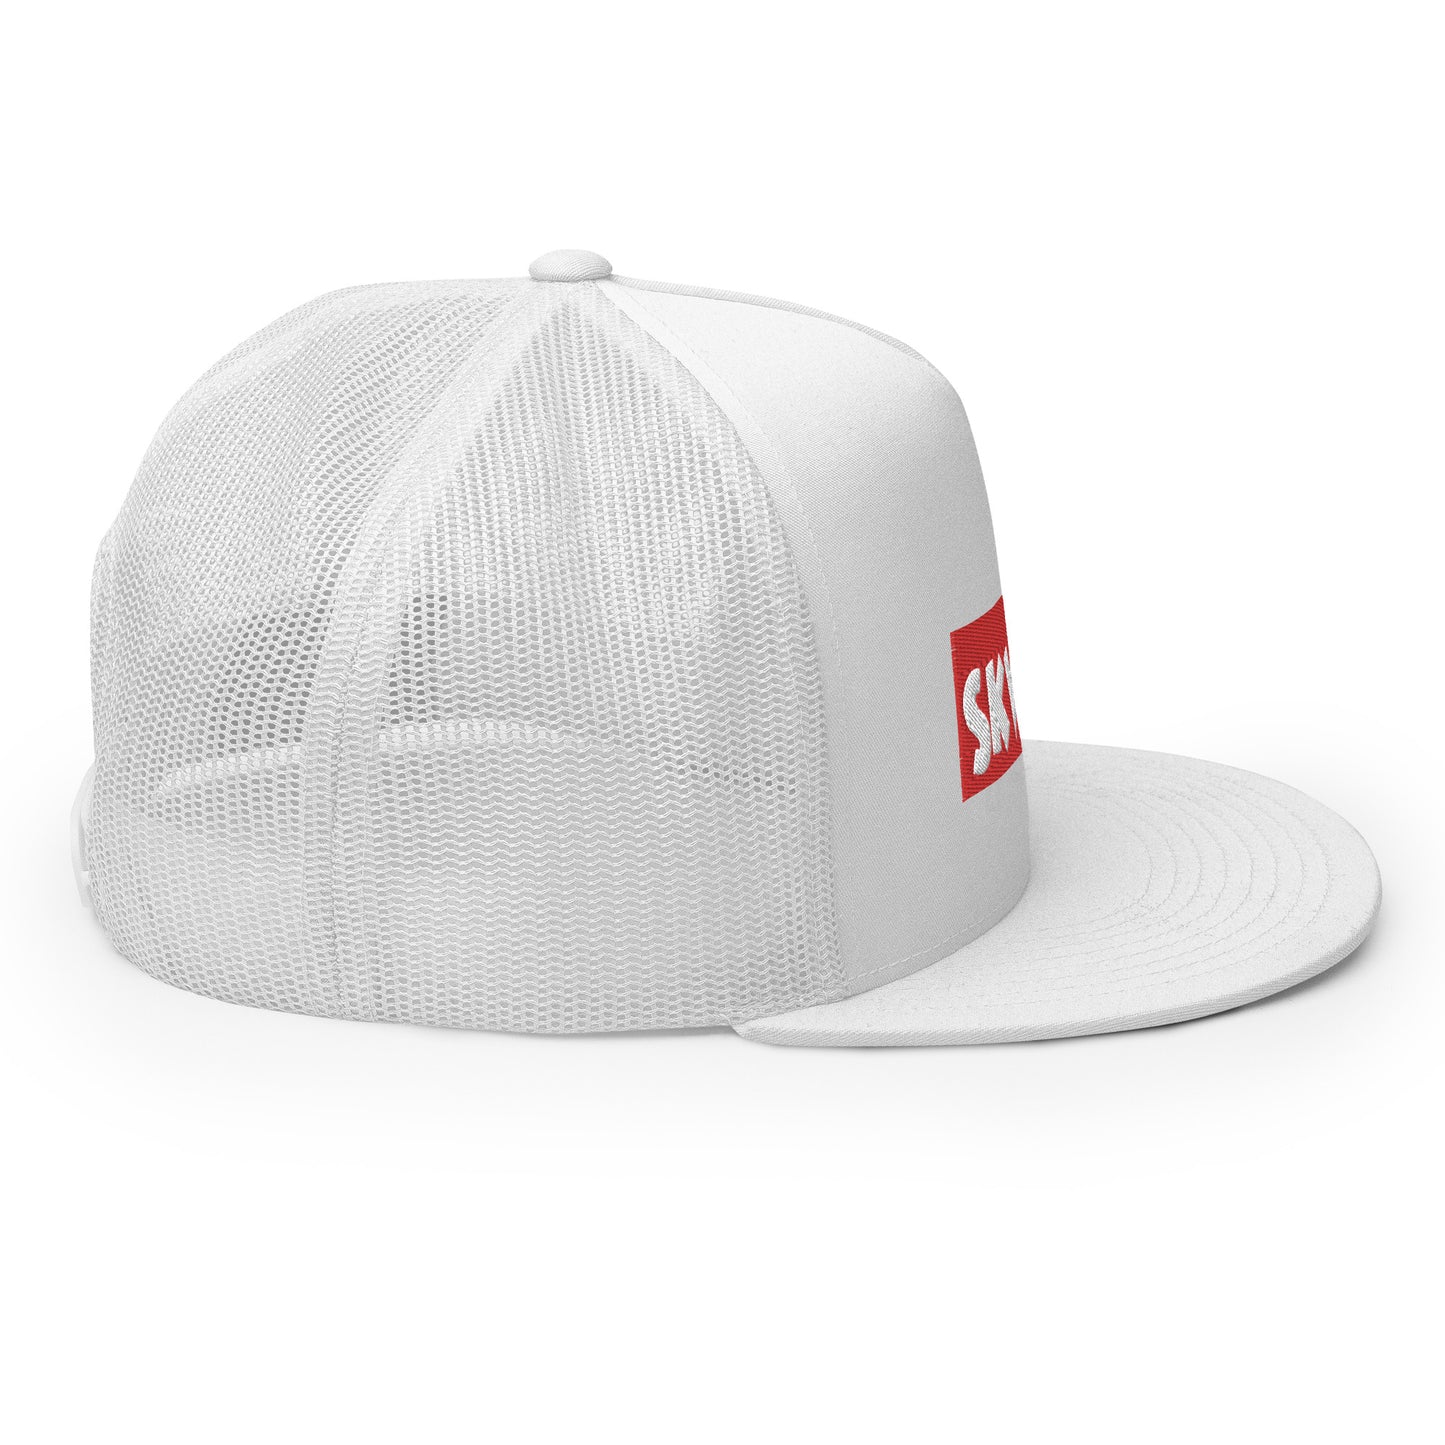 Skwok Brand / Hat / Trucker Cap / Box Logo / White